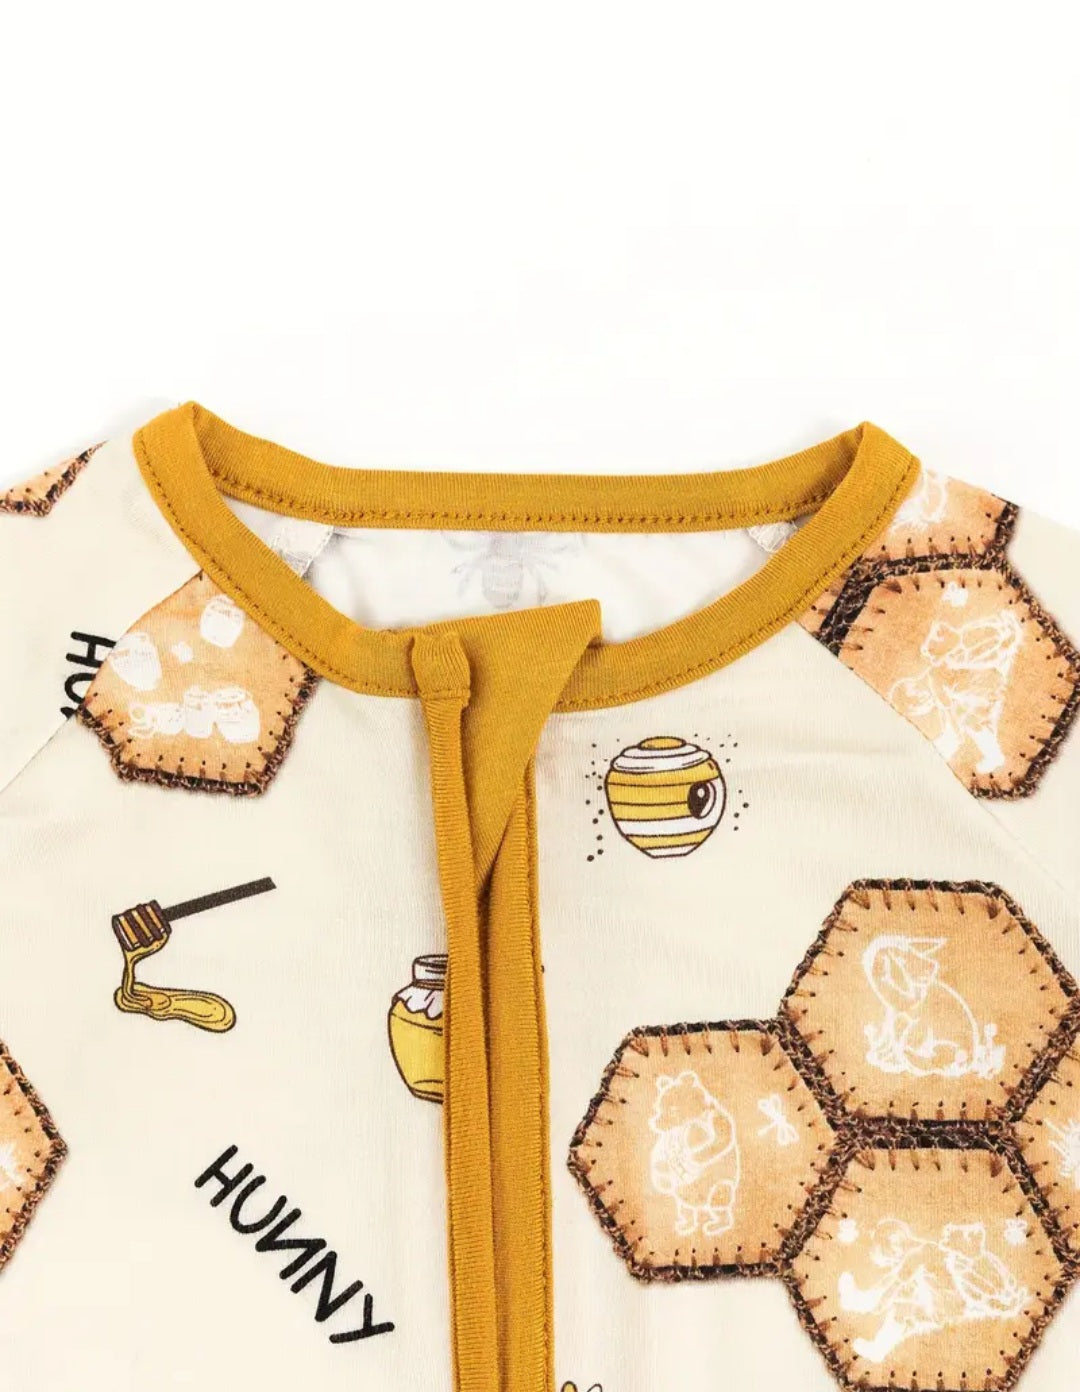 Bamboo Fiber Infant Bodysuit - Adorable Bee & Honey Print, Long-Sleeve Sleeper